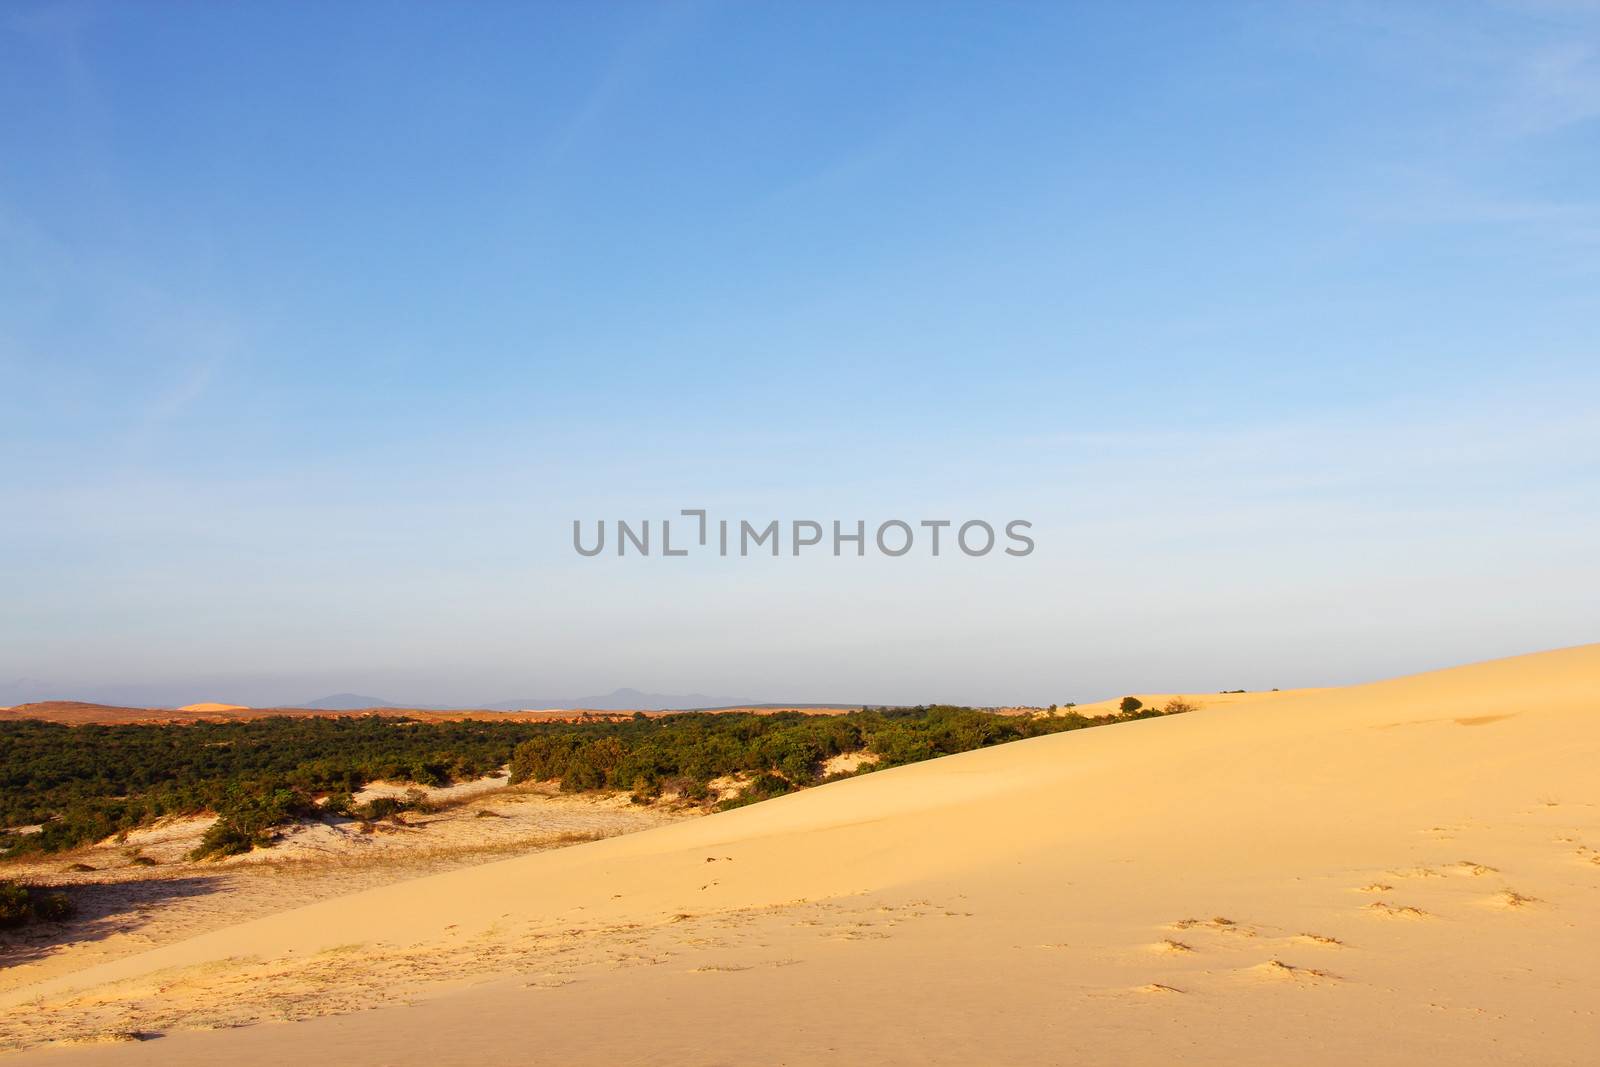 Oasis in desert landscape under bluy sky at sunny day